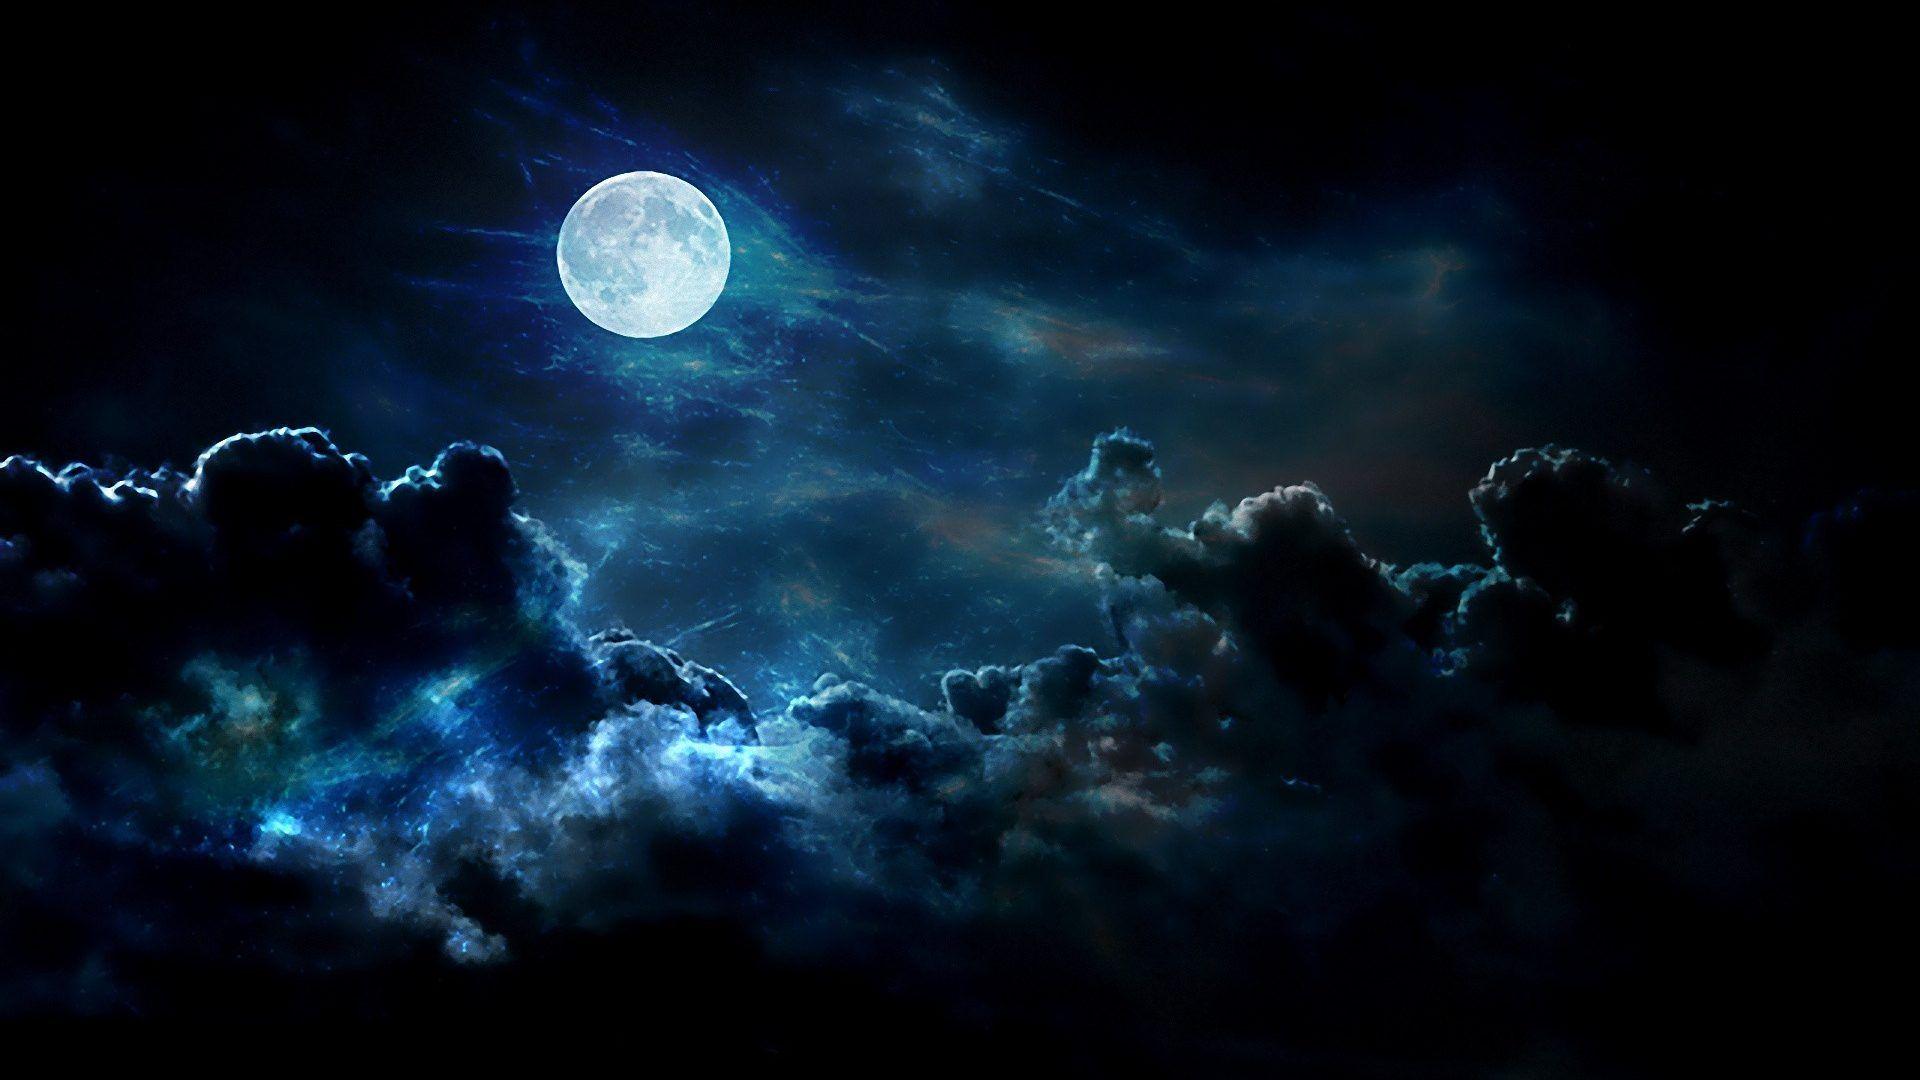 Sky: BIG BLUE Clouds Nature Night Moon SKIES FULL Phone Wallpaper